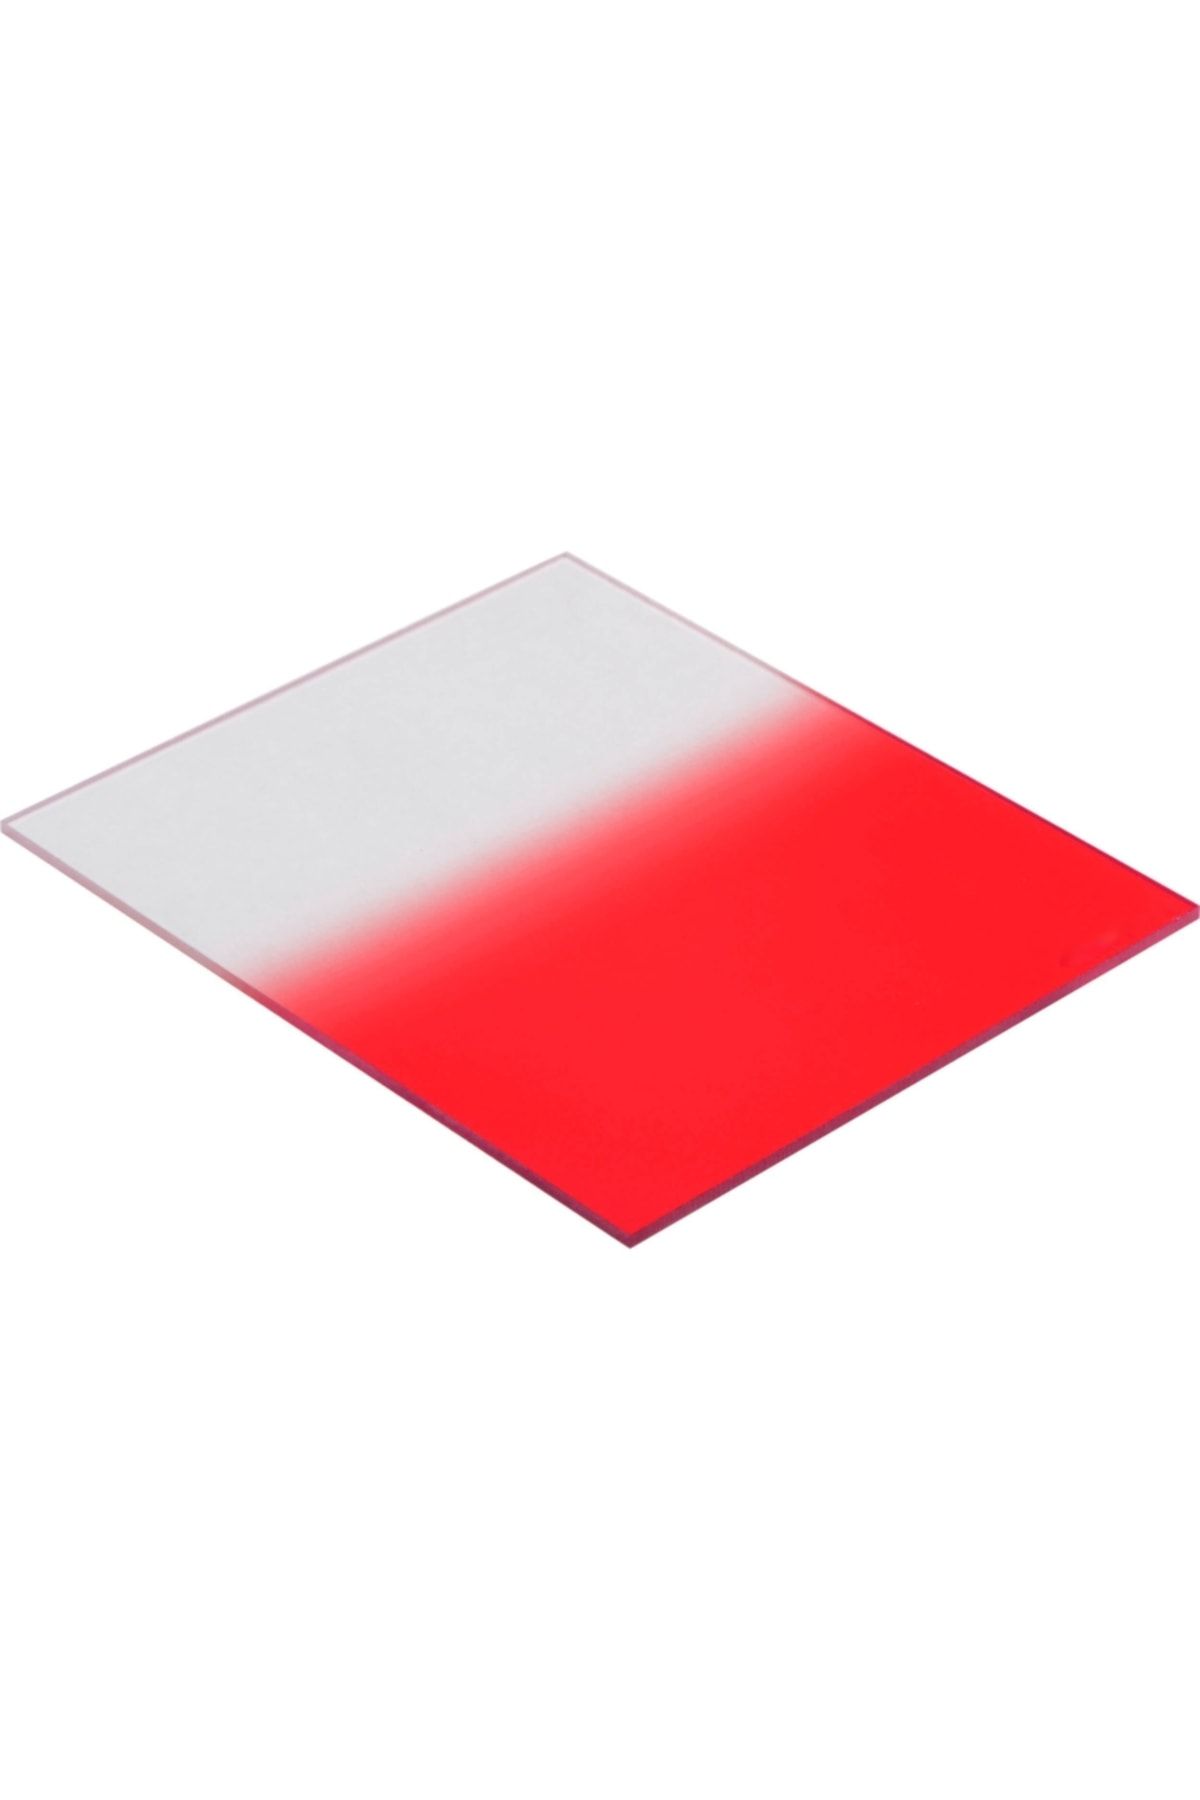 Genel Markalar Kırmızı P Tipi Square Kare Kademeli Degrade Graduated Red Kırmızı Filtre Lensler ve Filtreler